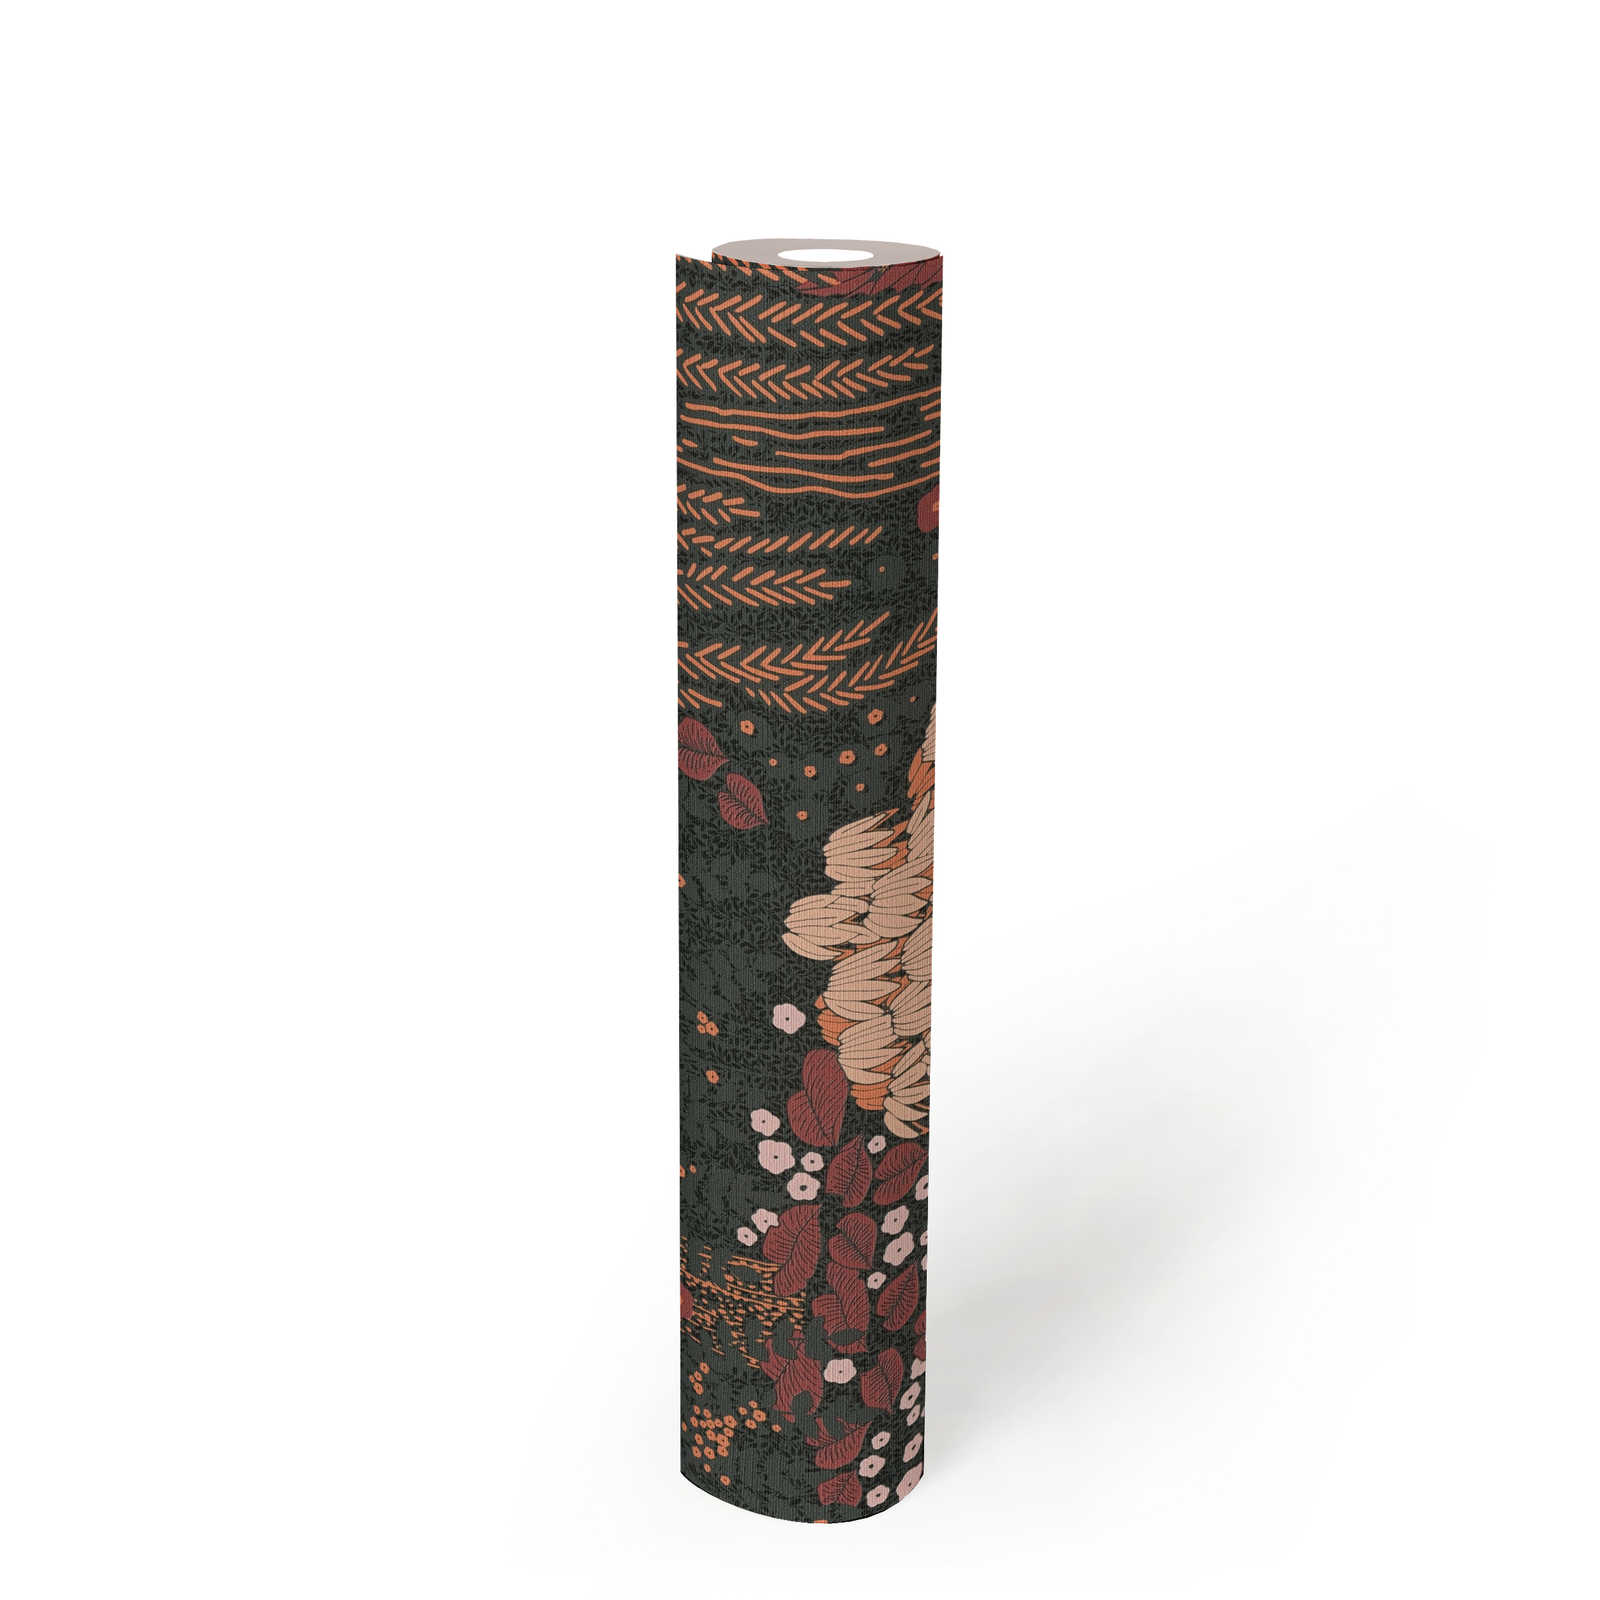             Papel pintado no tejido floral con hojas textura ligera, mate - negro, rojo, rosa
        